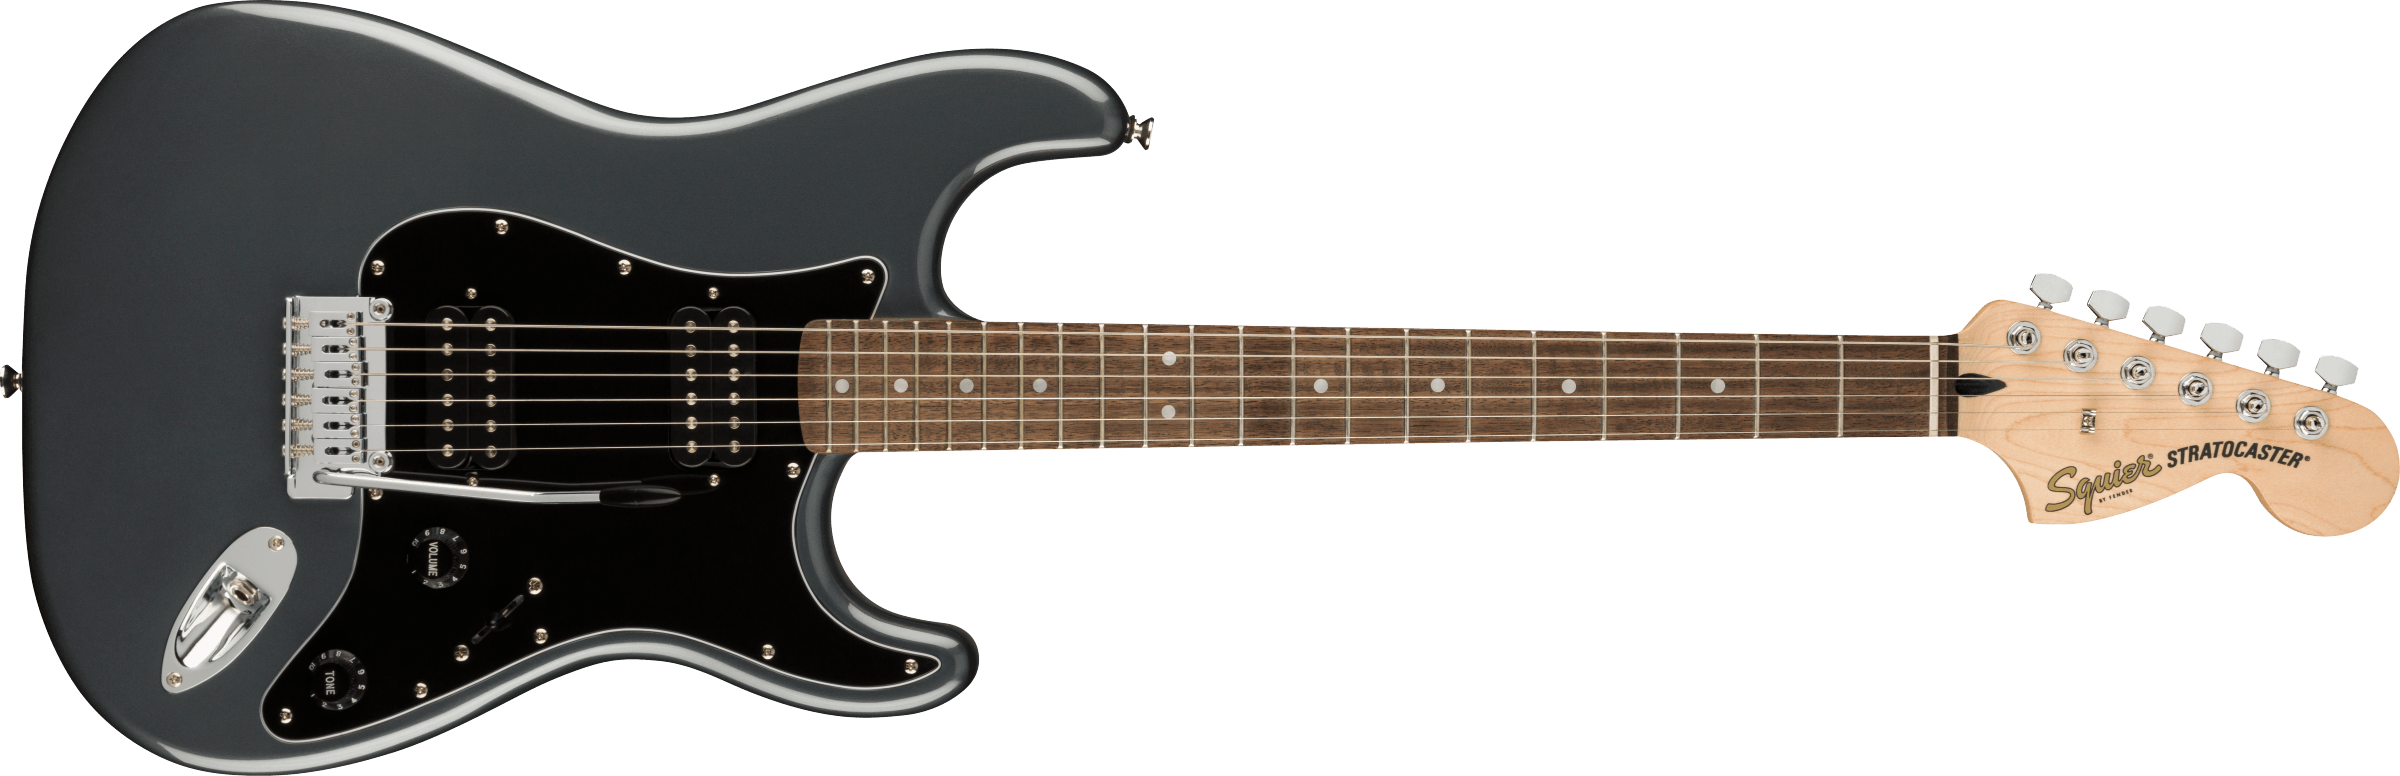 Squier Affinityシリーズ ピックガードAffinity Series Stratocaster